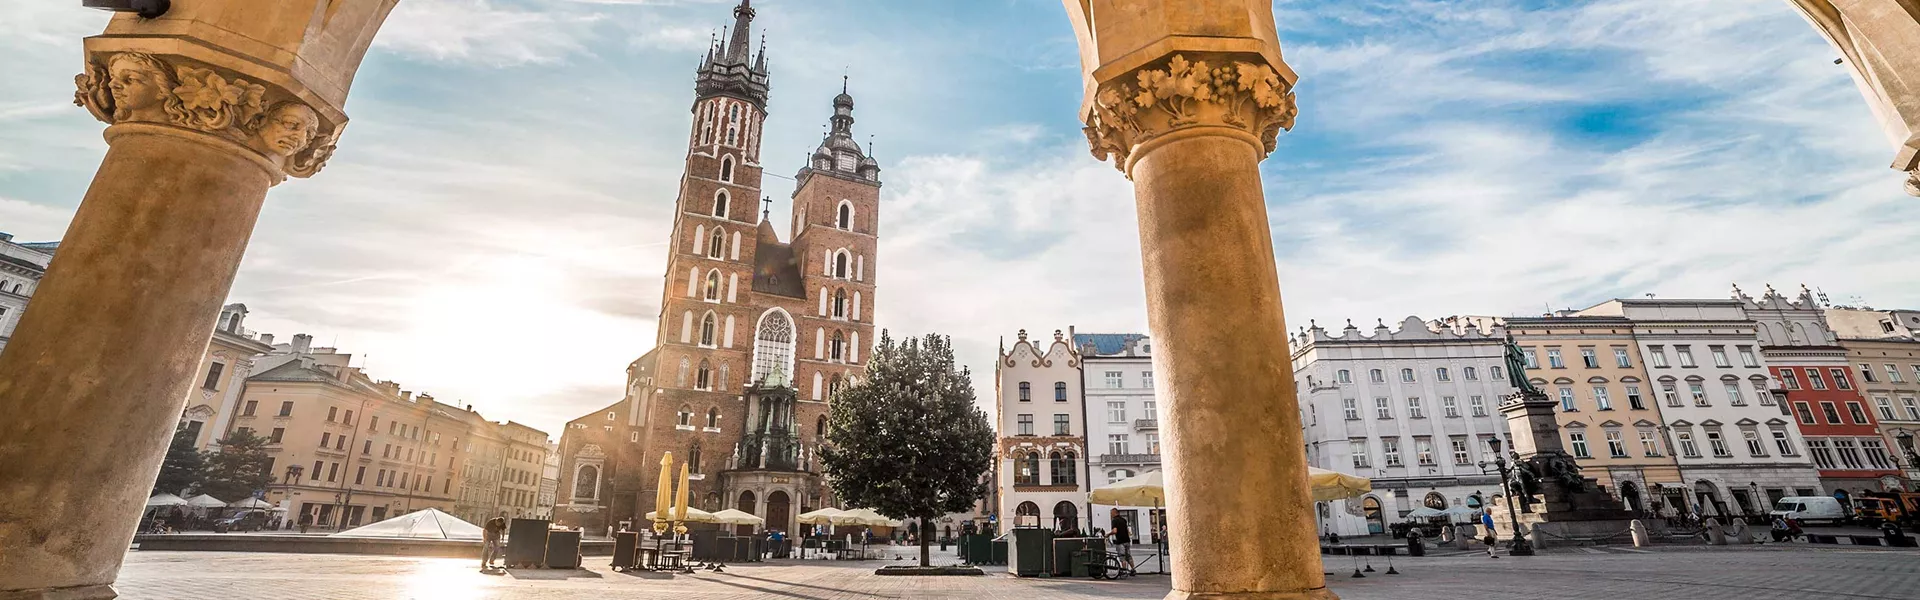 Market Square of Krakow, Poland